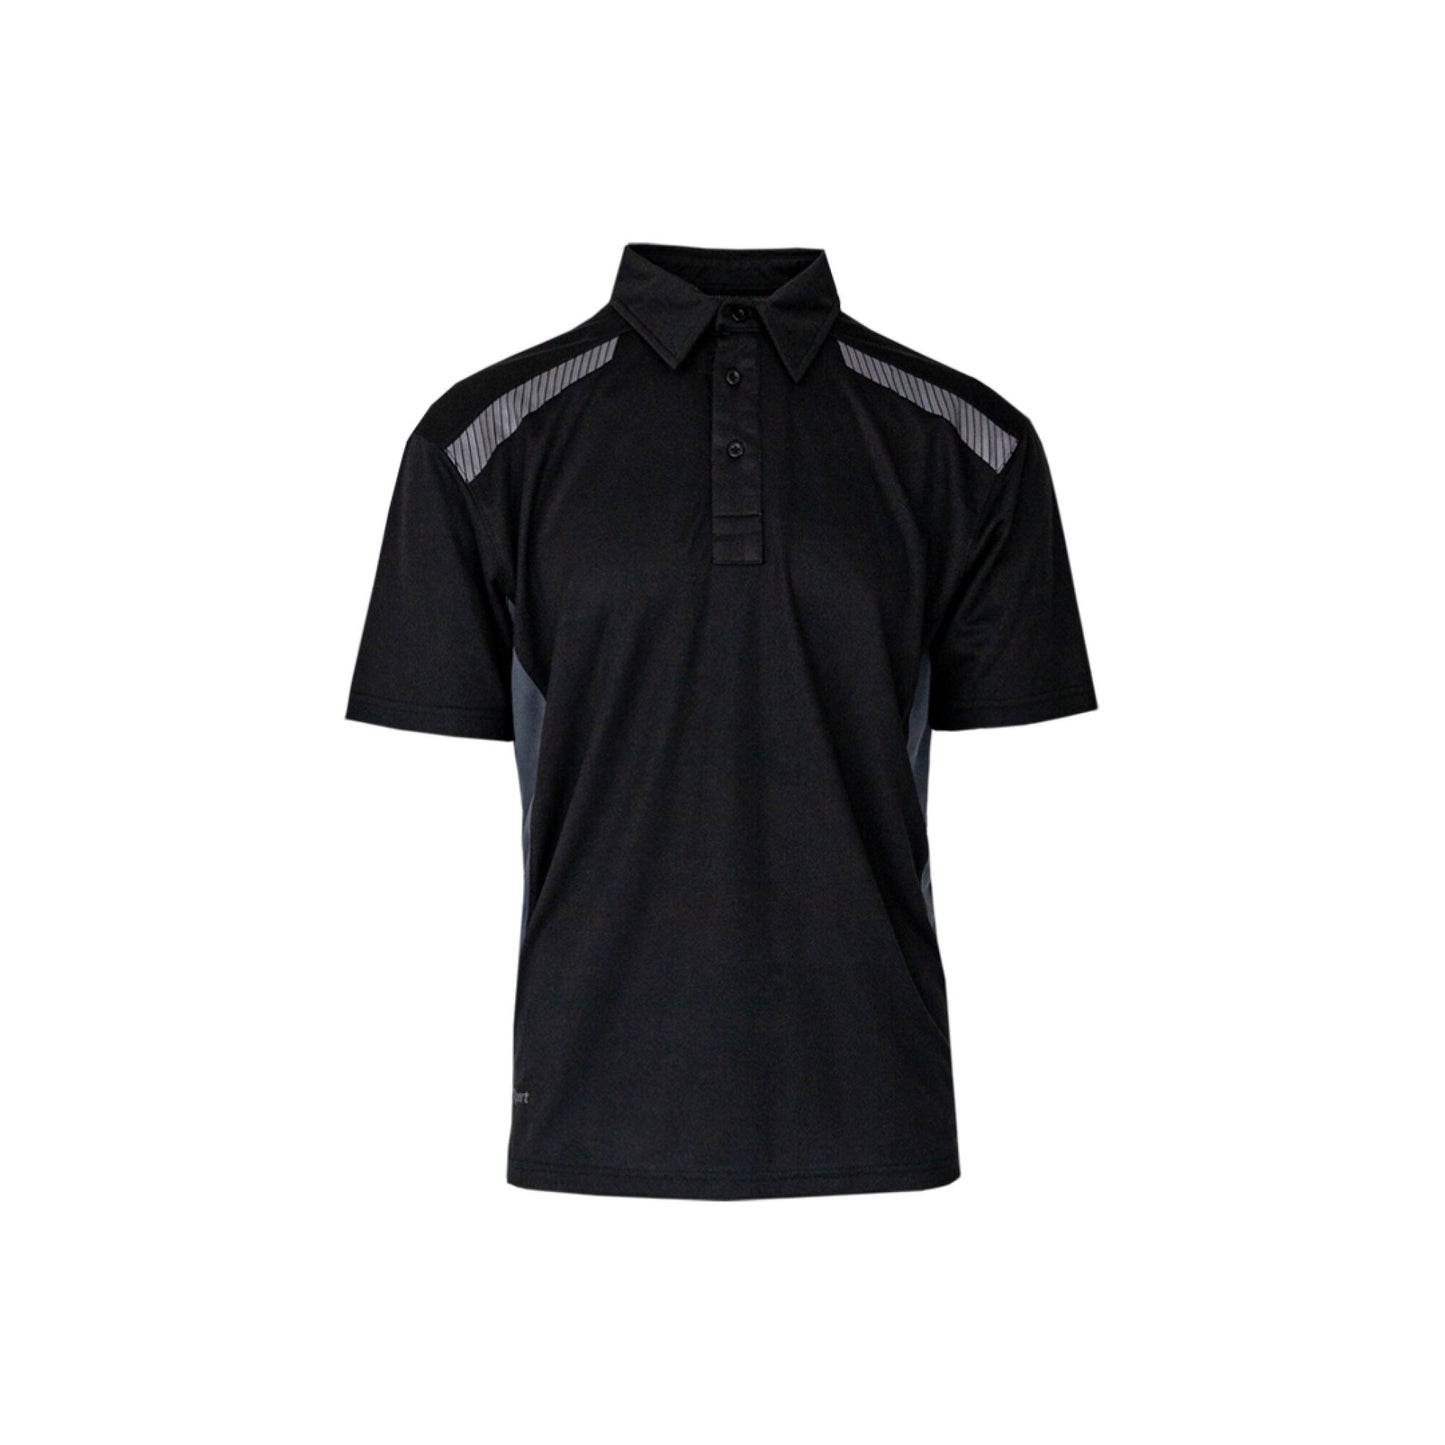 Xpert Pro Stretch Polo Shirt - Black/Grey